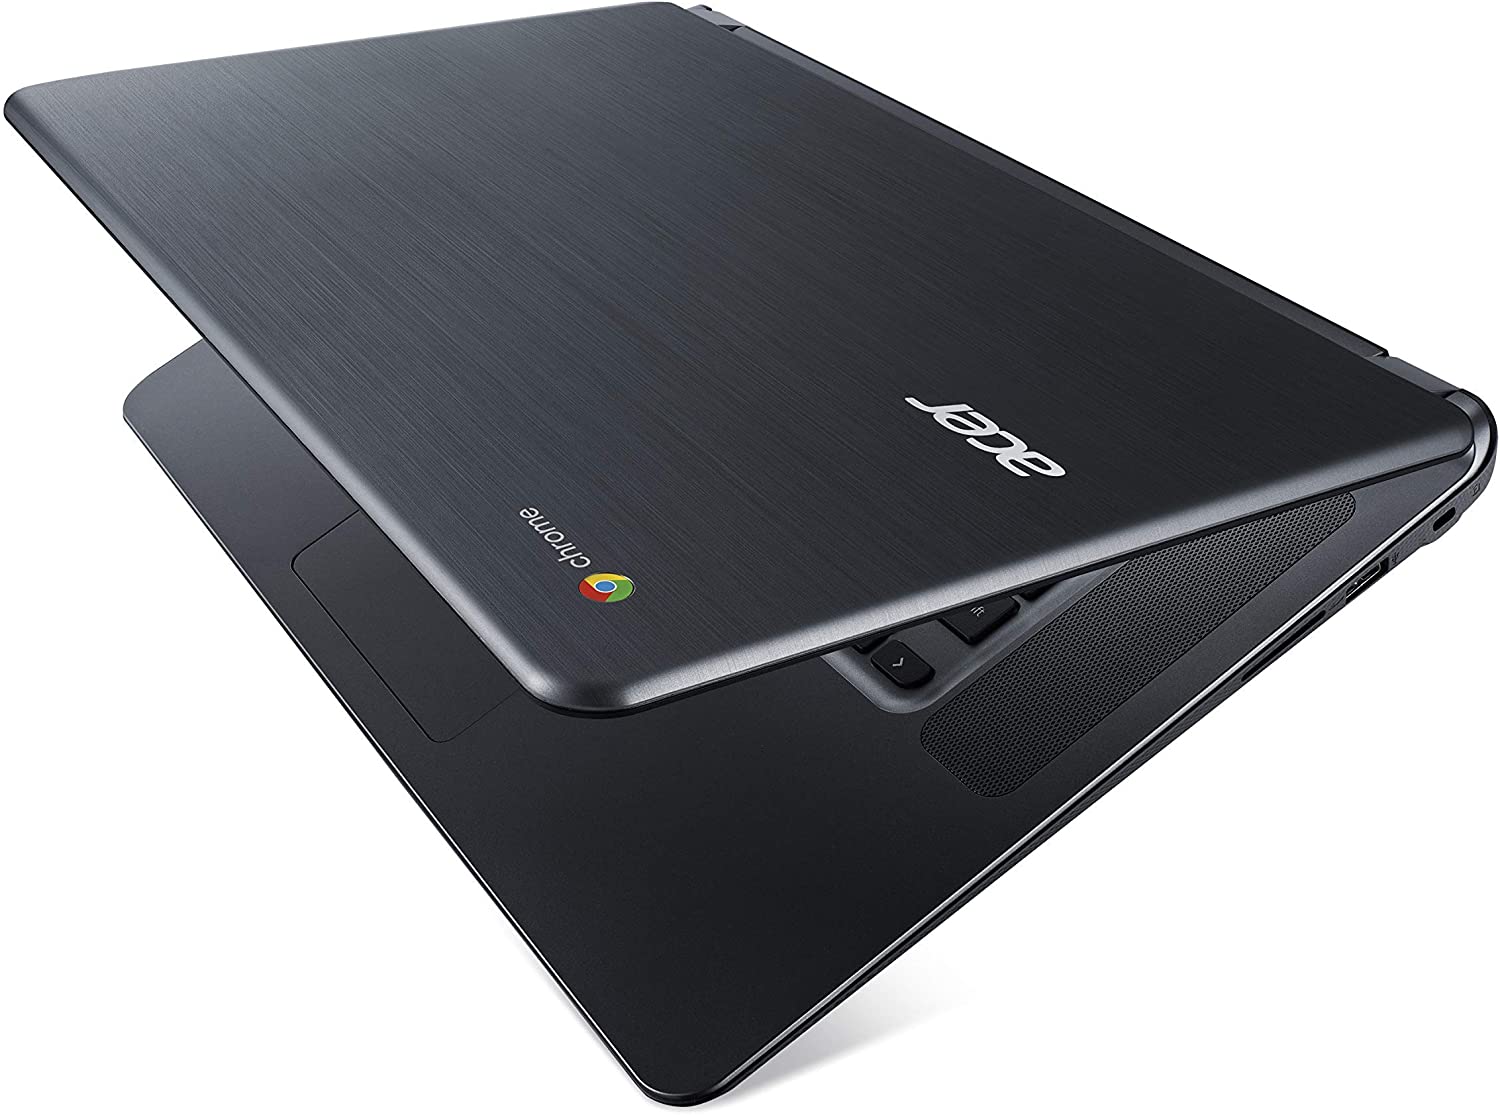 Acer Chromebook 15 CB3-532-C42P, Intel Celeron N3060, 15.6" HD Display, 4GB LPDDR3, 16GB eMMC + 64gb memory card (Renewed)